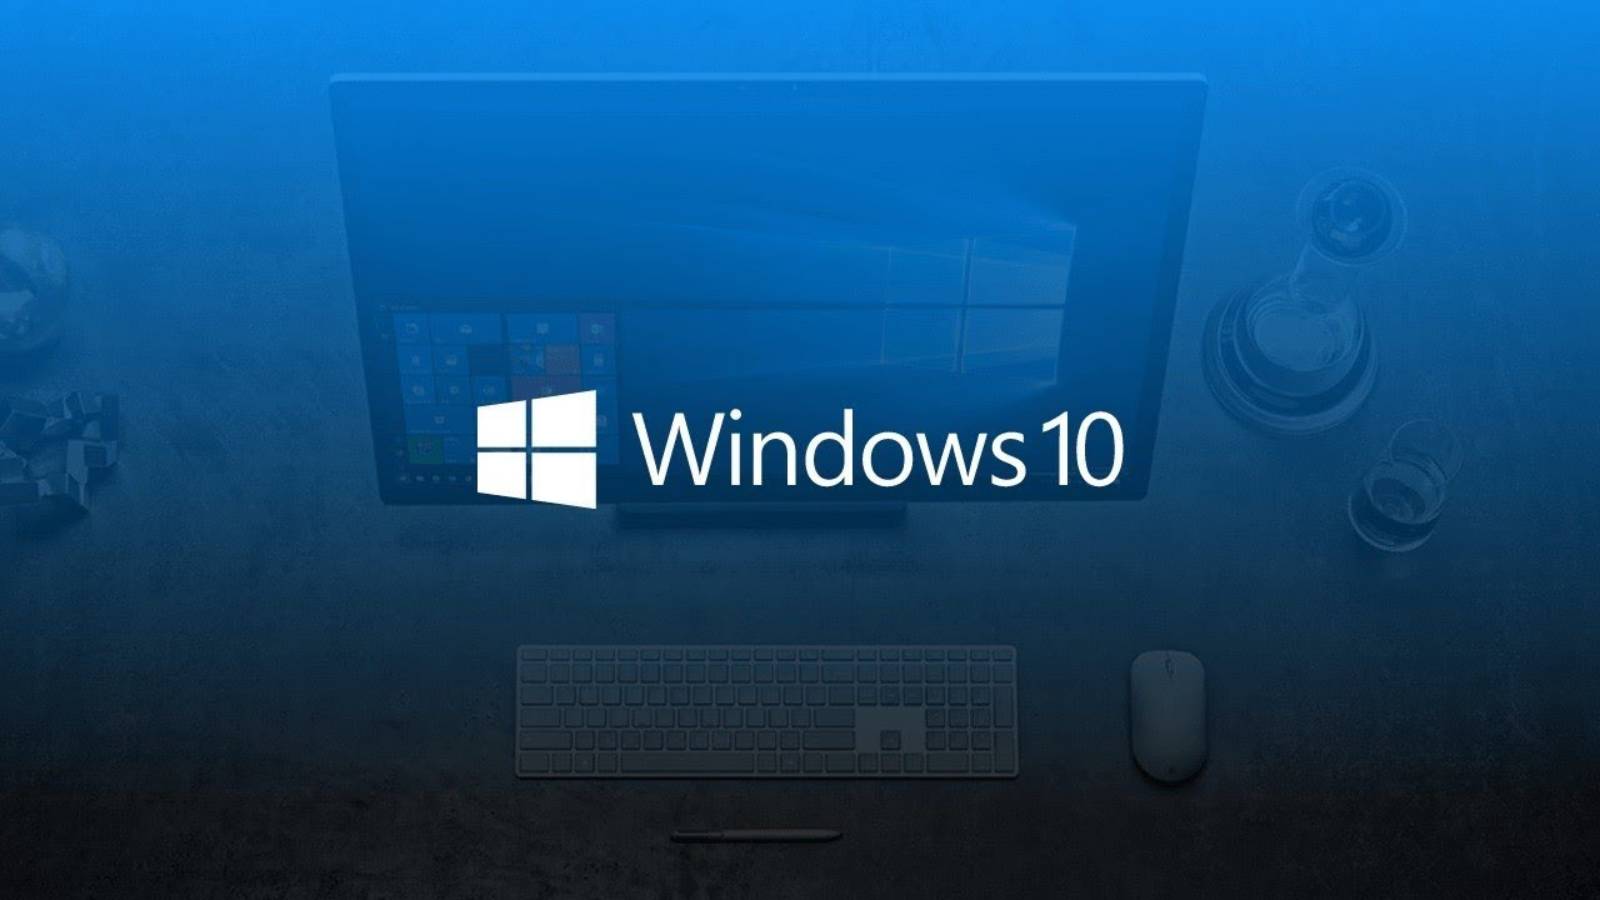 Windows 10-ransomwareprobleem